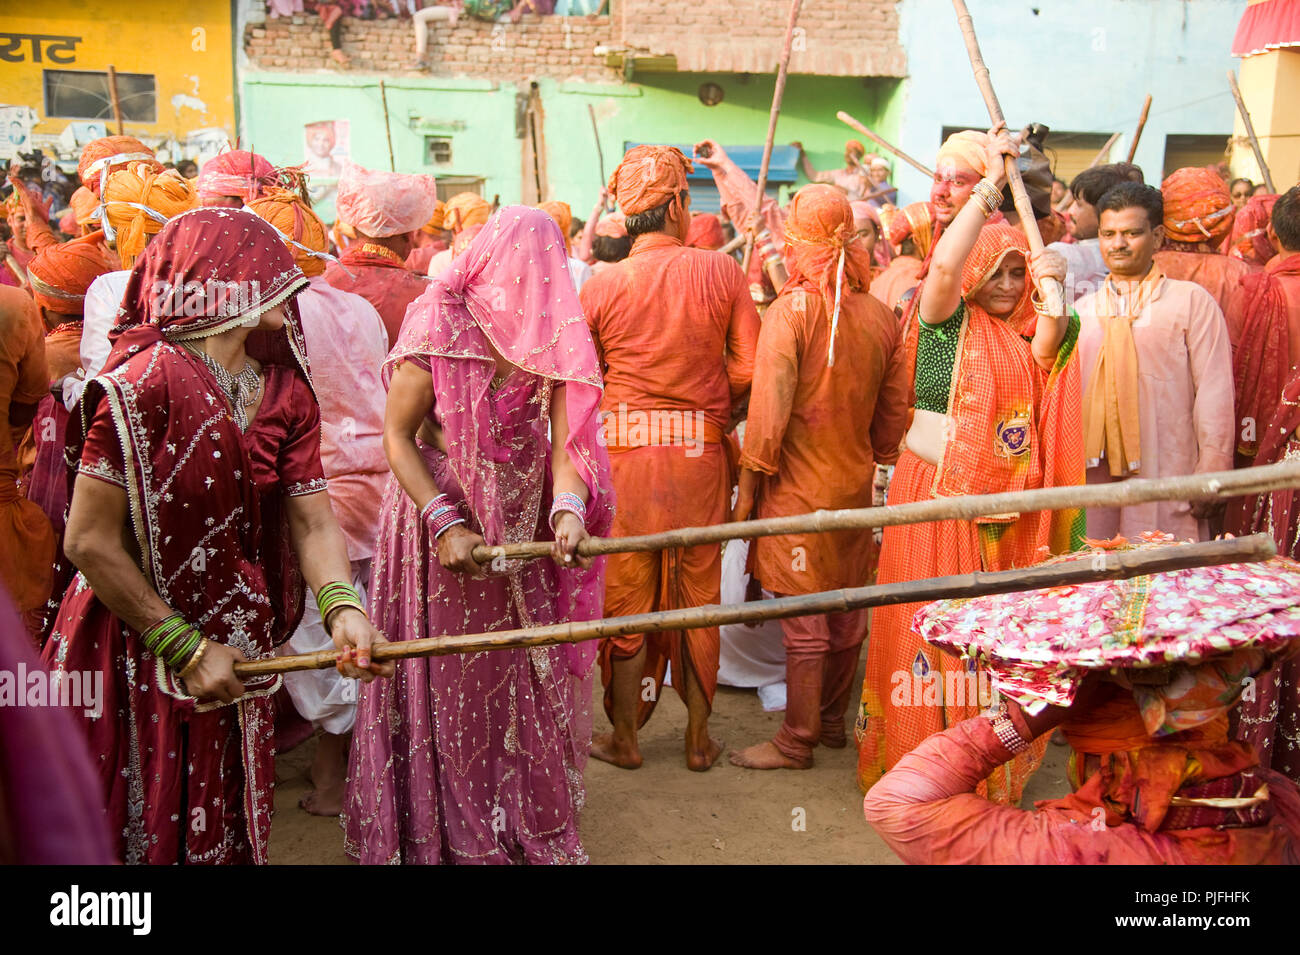 Anhänger Sie clelebrate nandgaon Lathmar Holi Festival im Dorf Mathura Uttar Pradesh Indien Asien, Südostasien Stockfoto